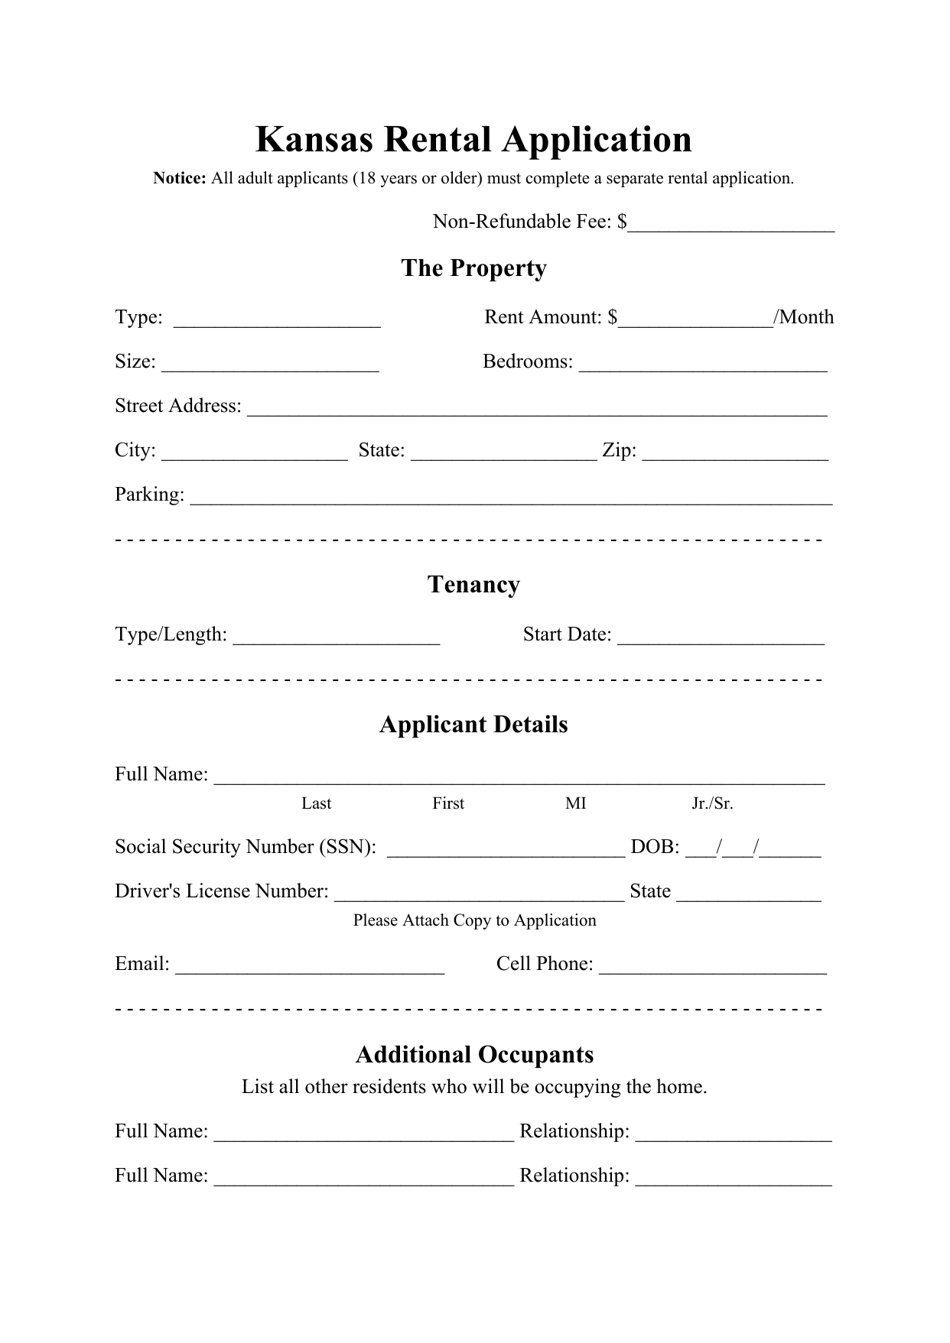 Rental Application Form - Kansas, Page 1